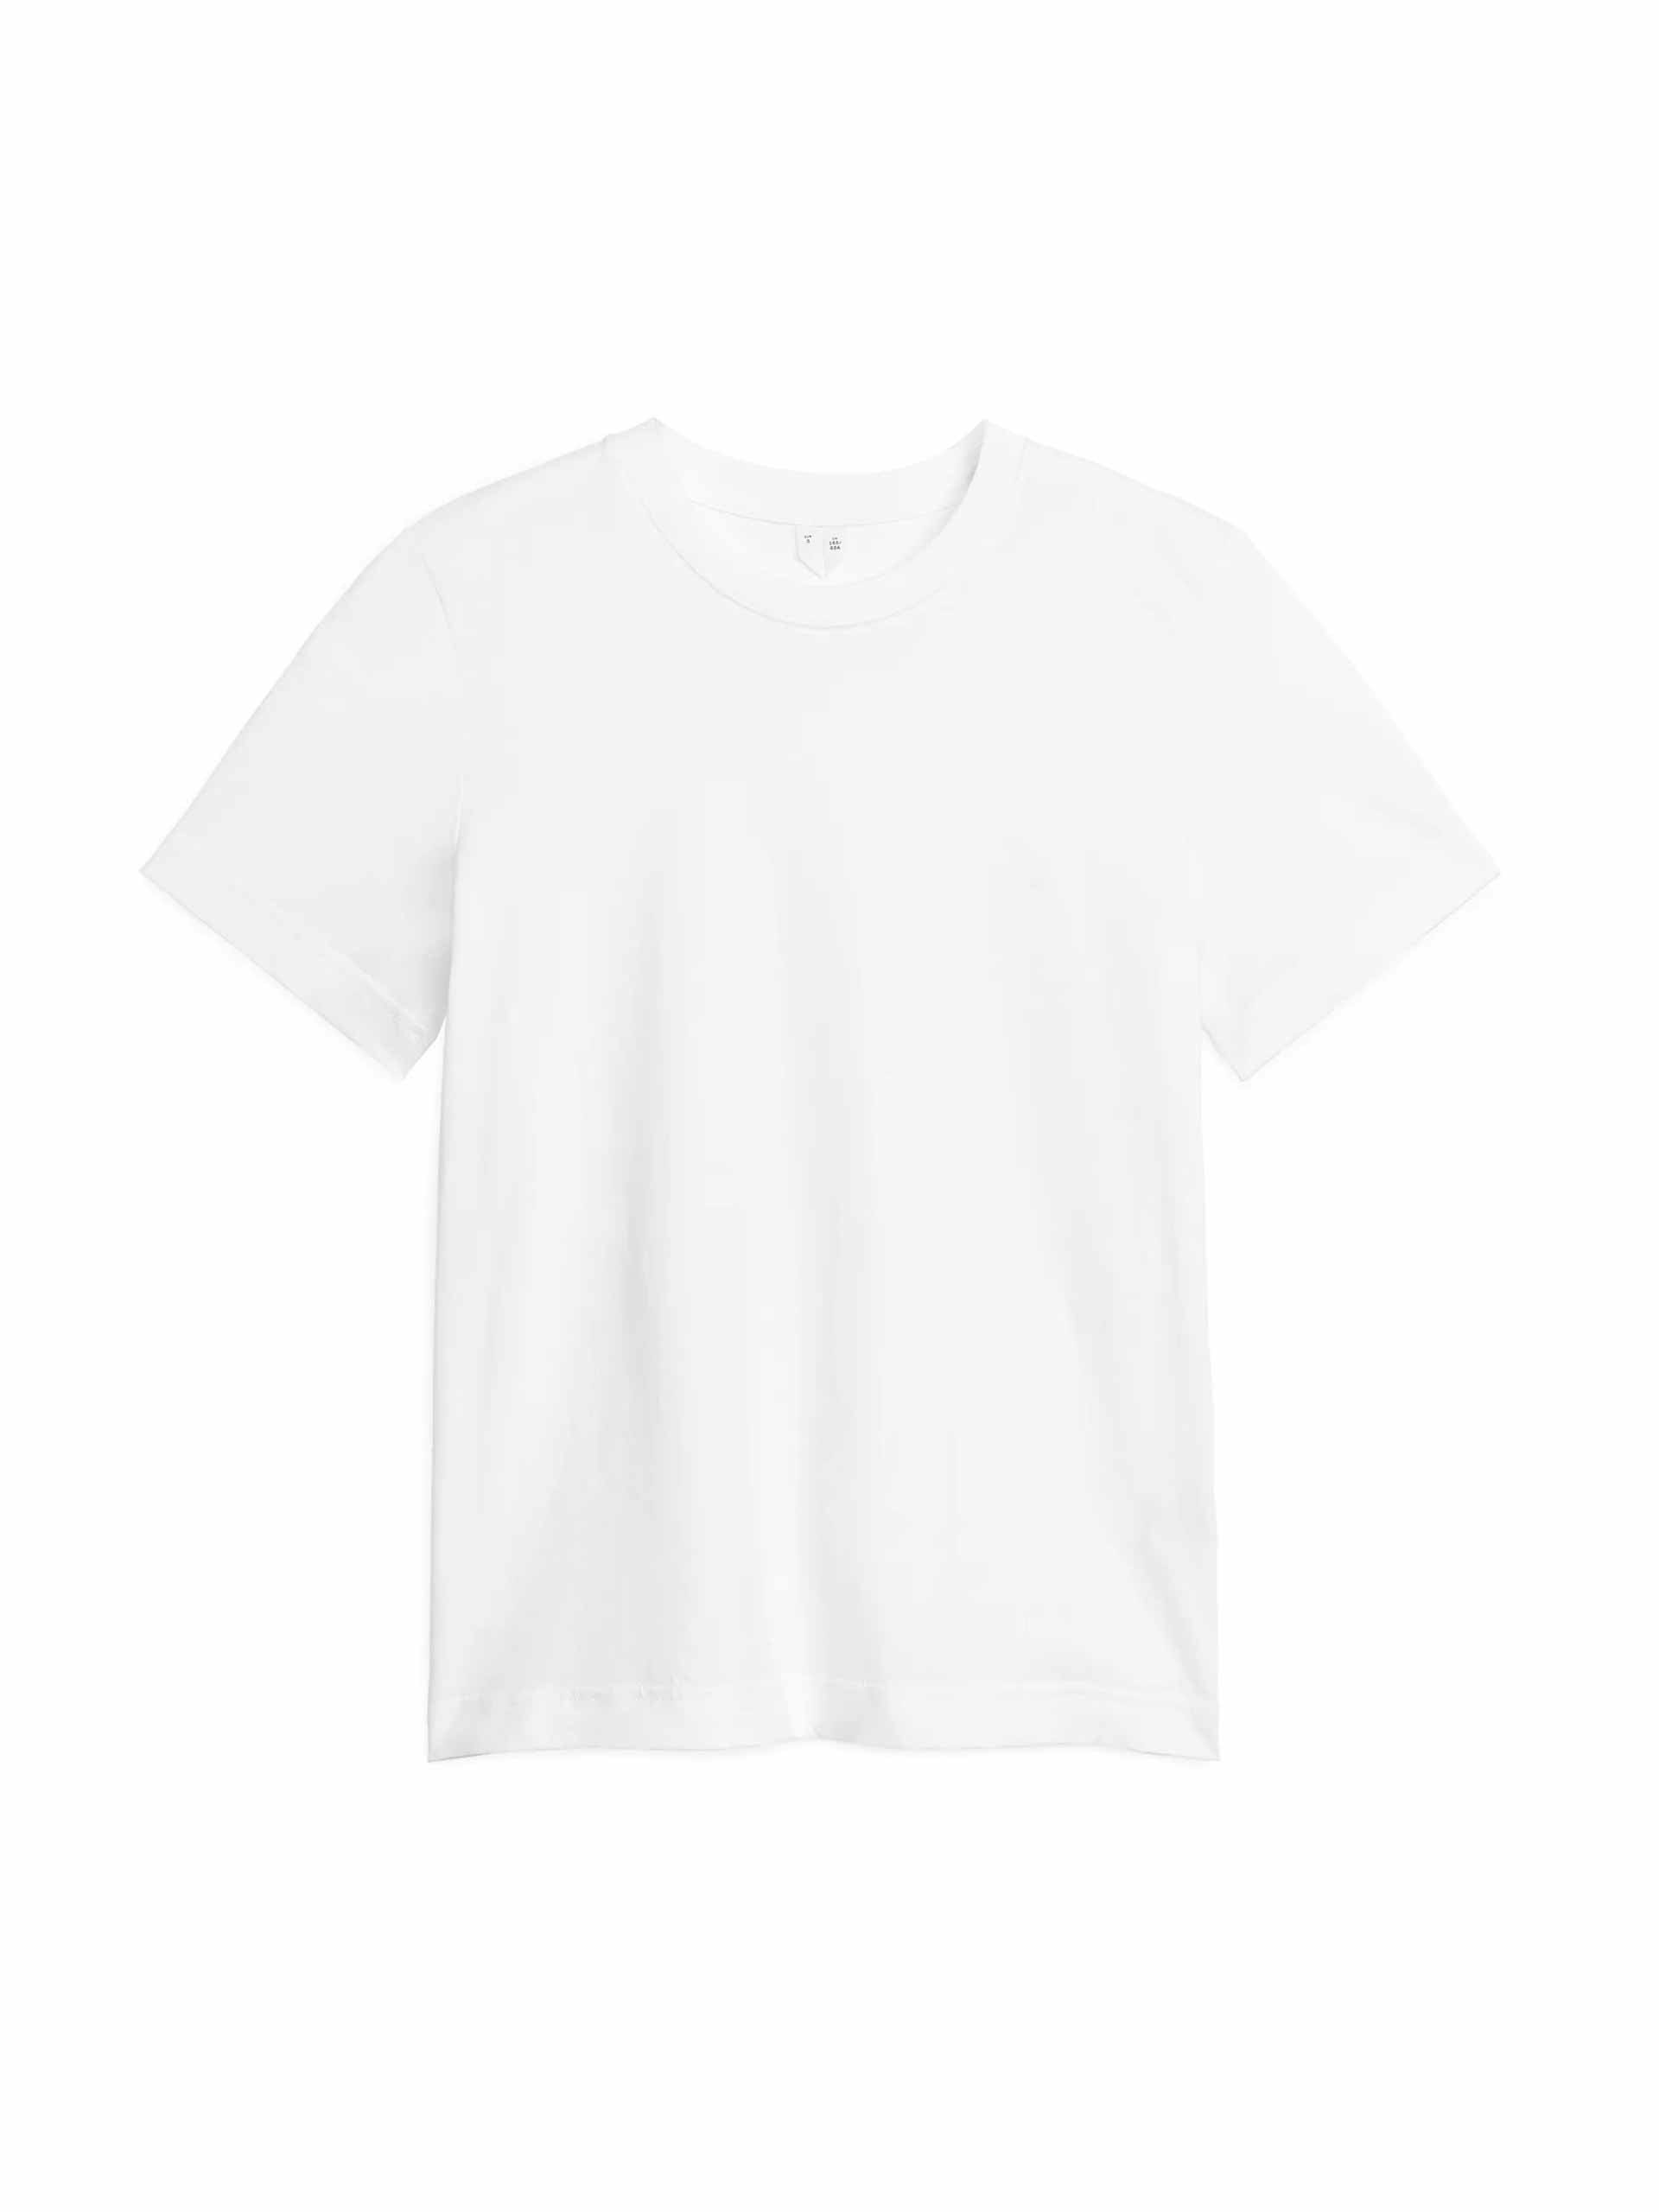 Crew-neck white t-shirt